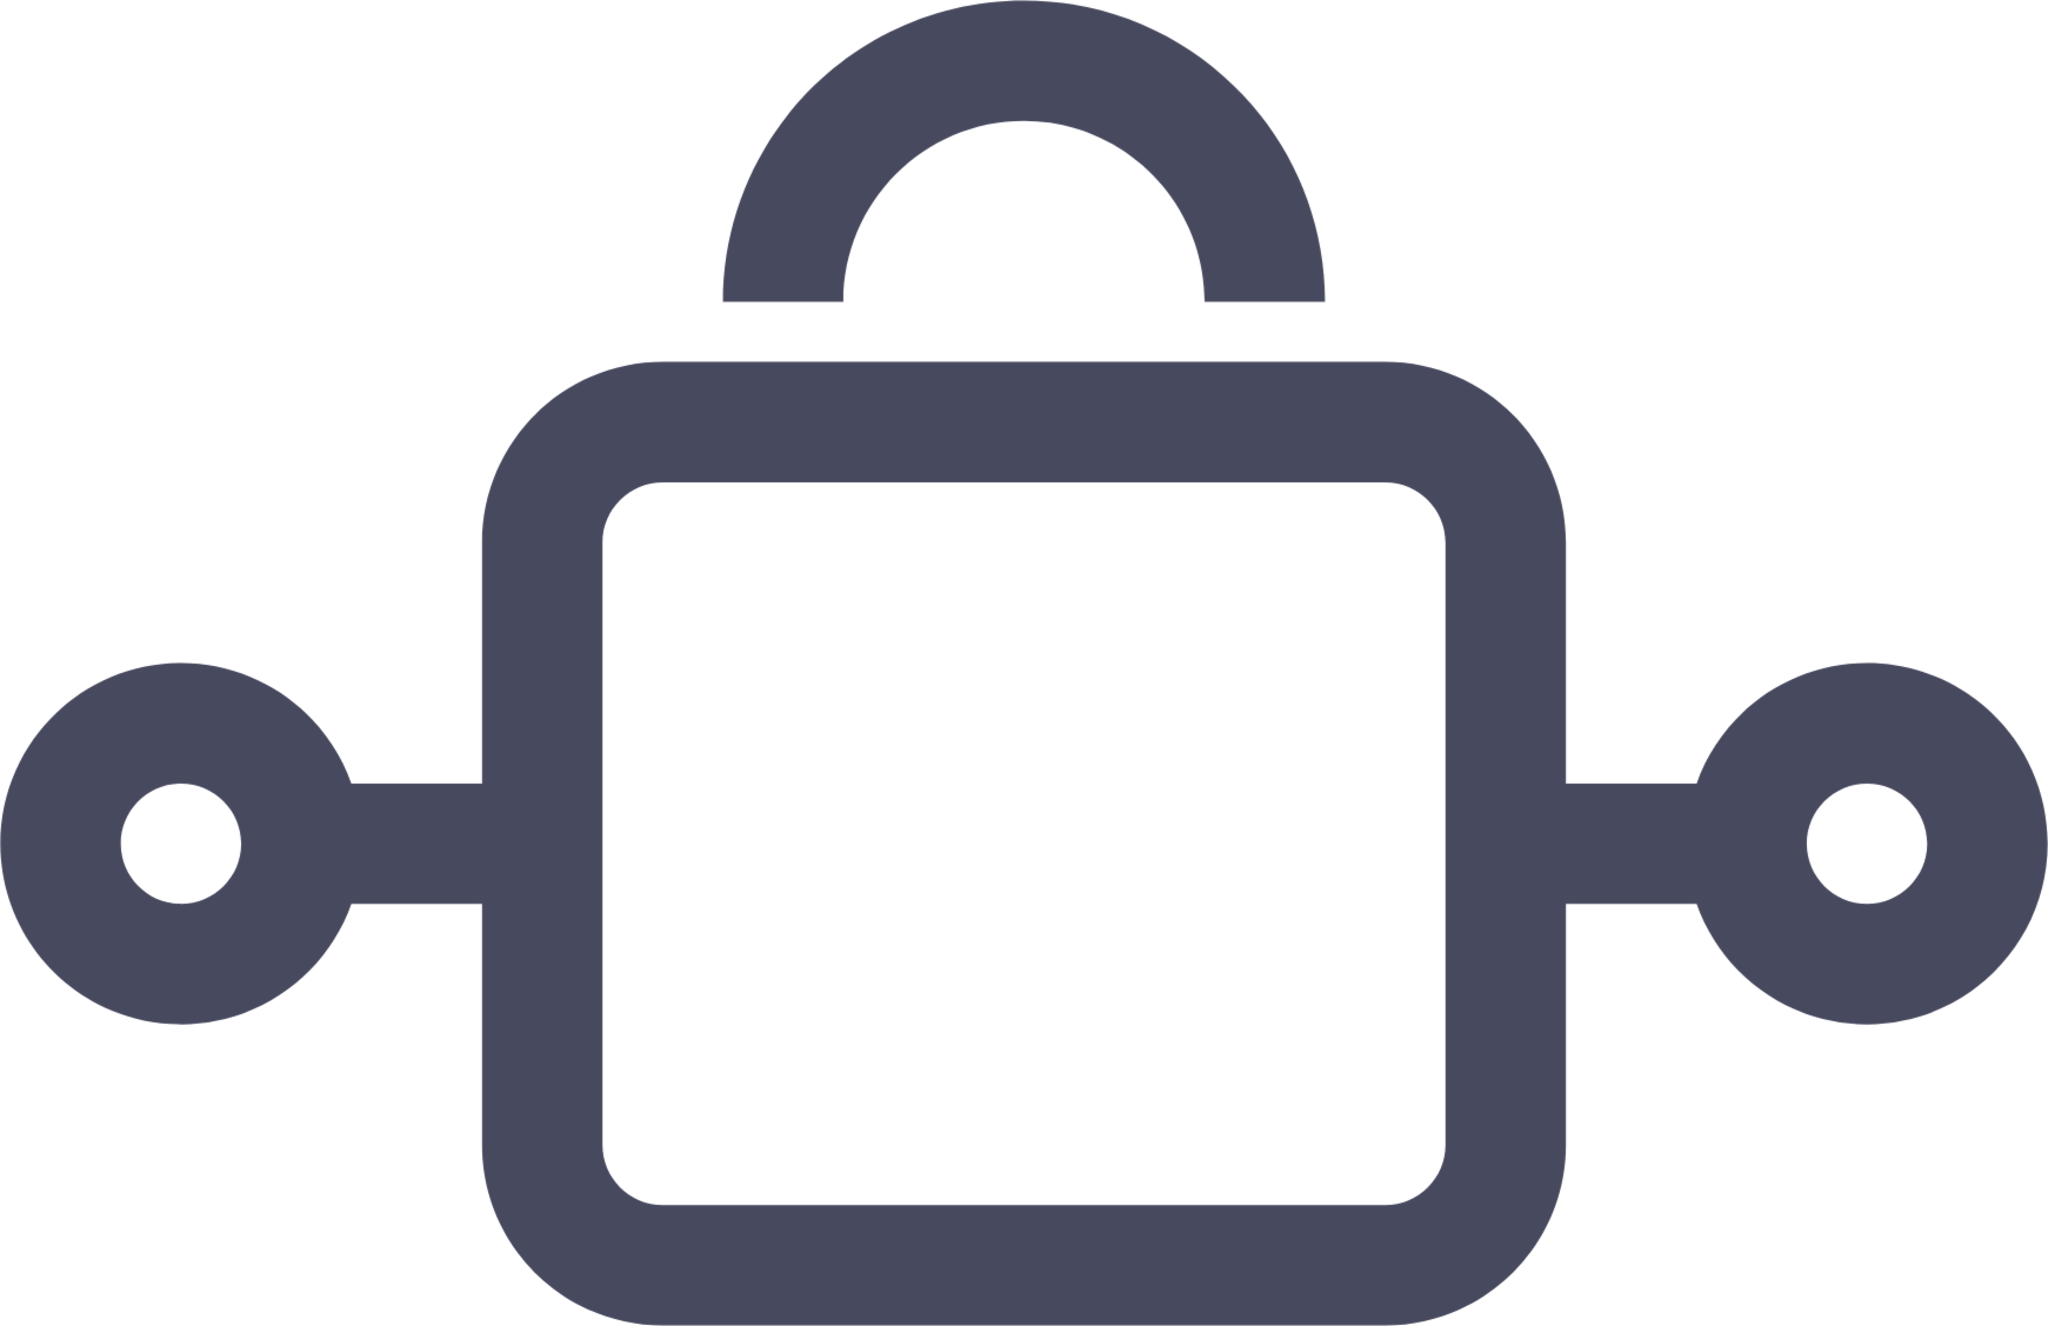 digital security blockchain icon